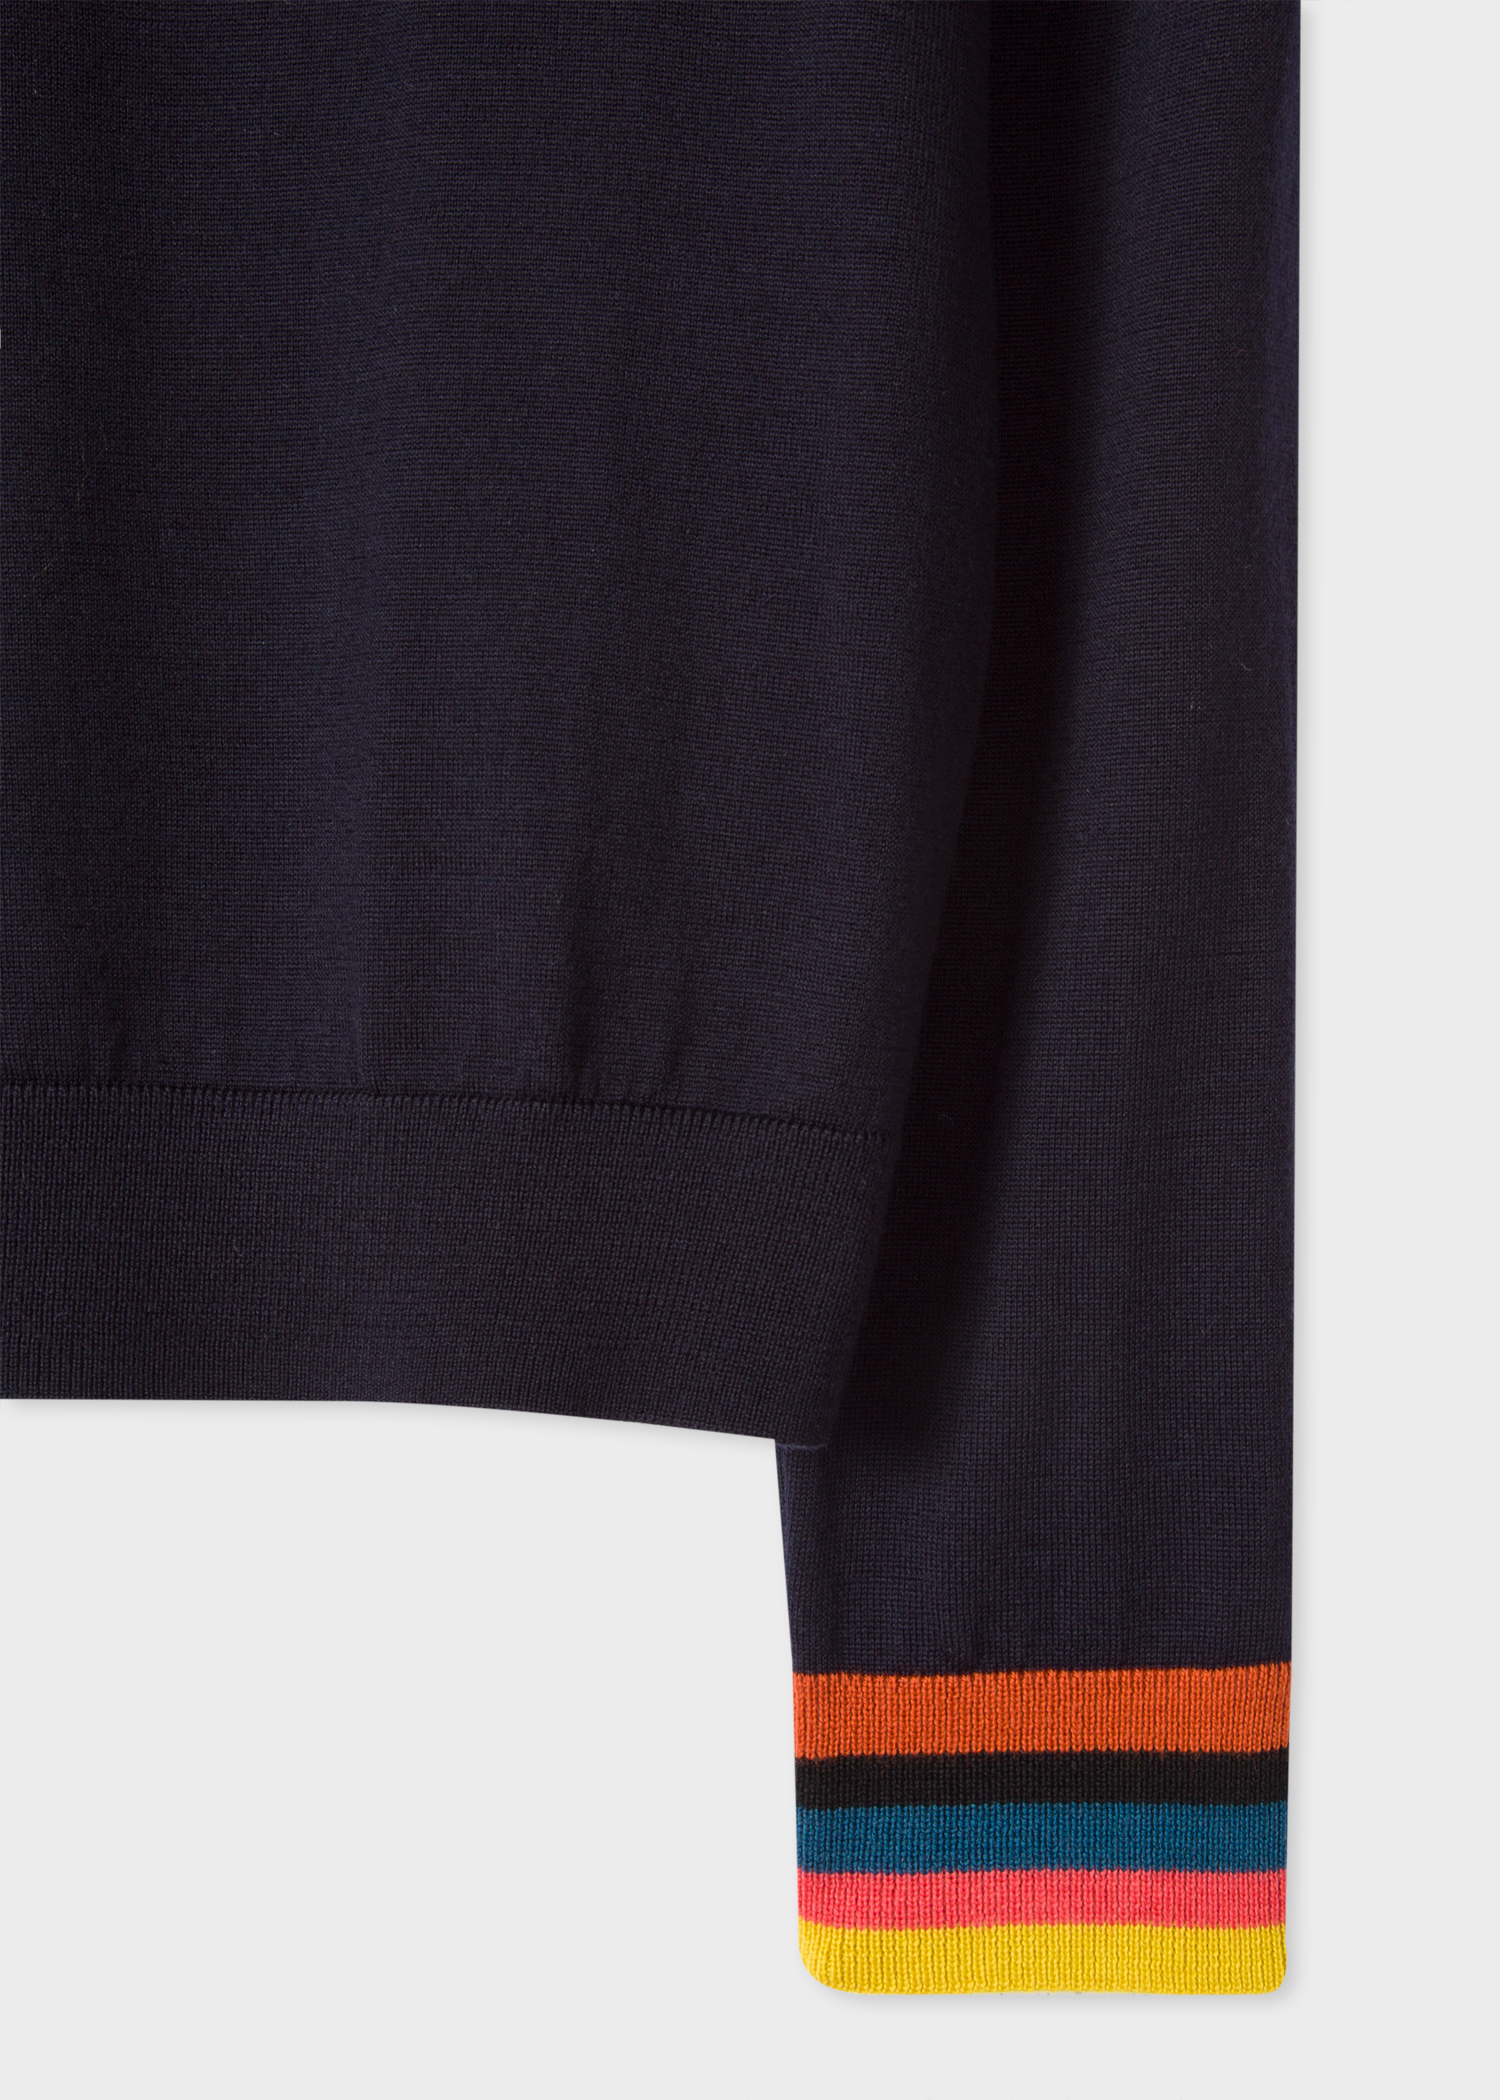 Sleeve View - Women's Dark Navy Merino Wool Sweater With 'Artist Stripe' Cuffs Paul Smith